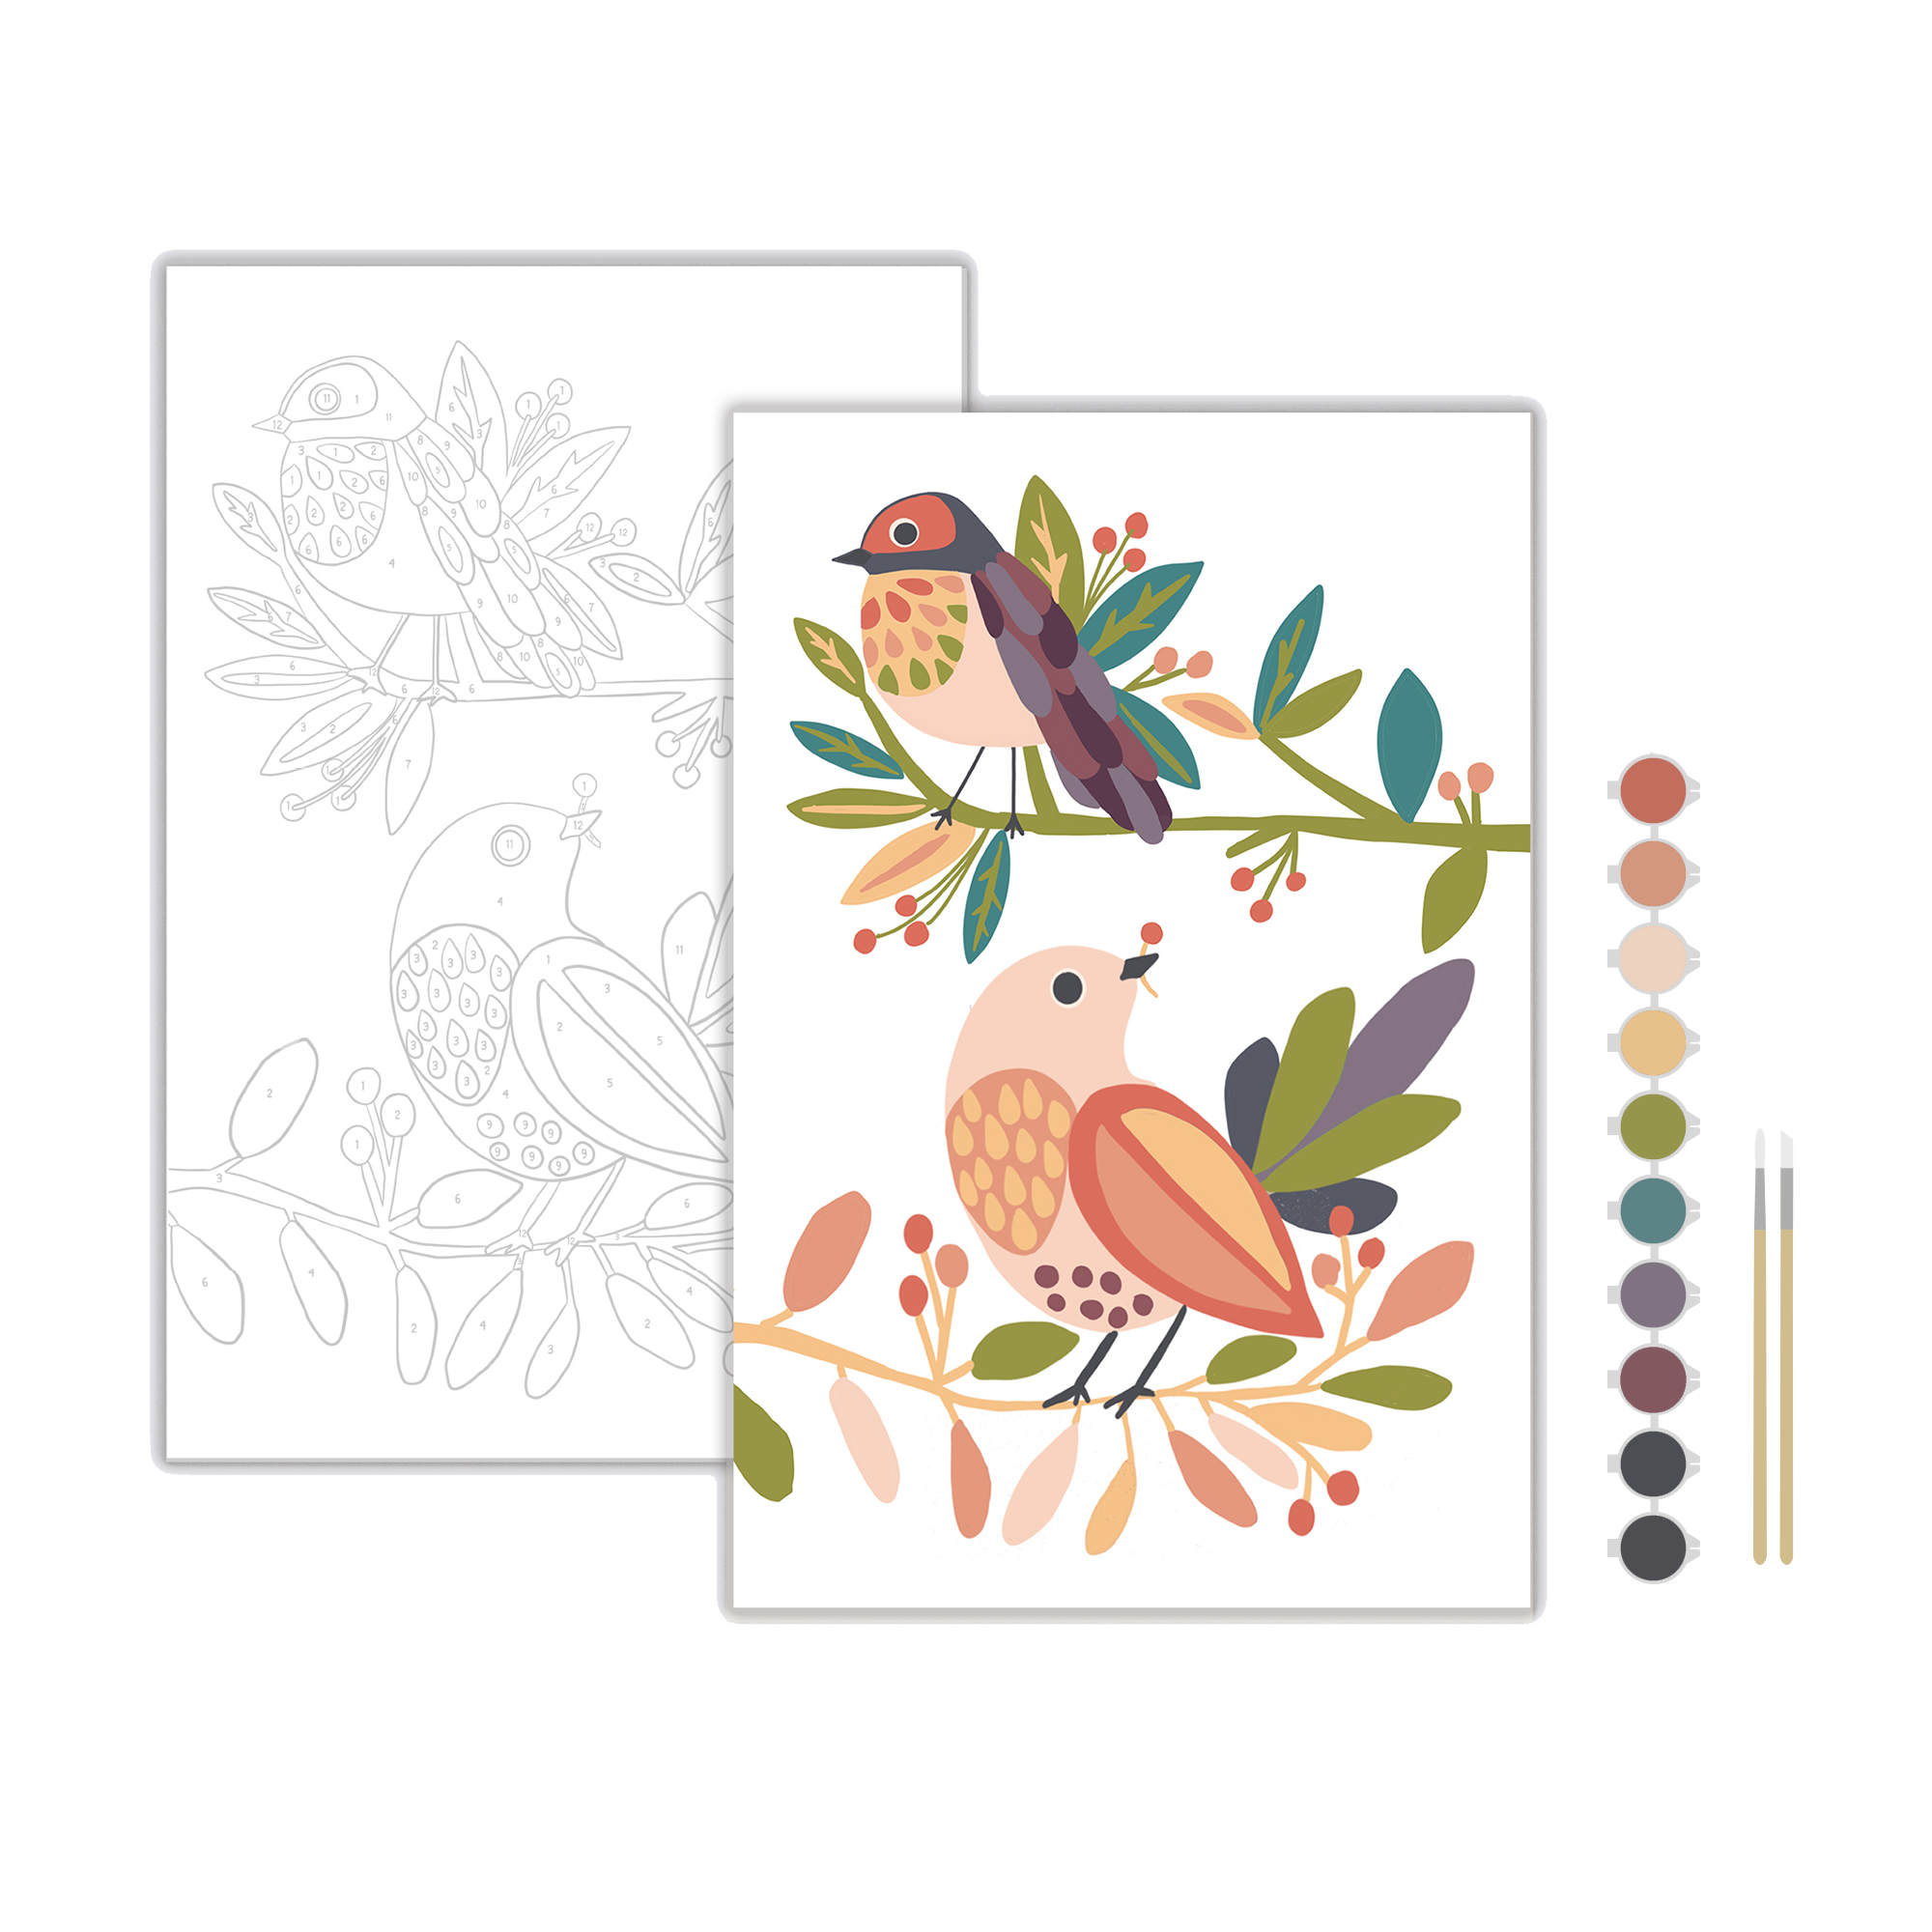 Birds on a Branch Meditative Art Paint by Number Kit: Paint by Number Kit